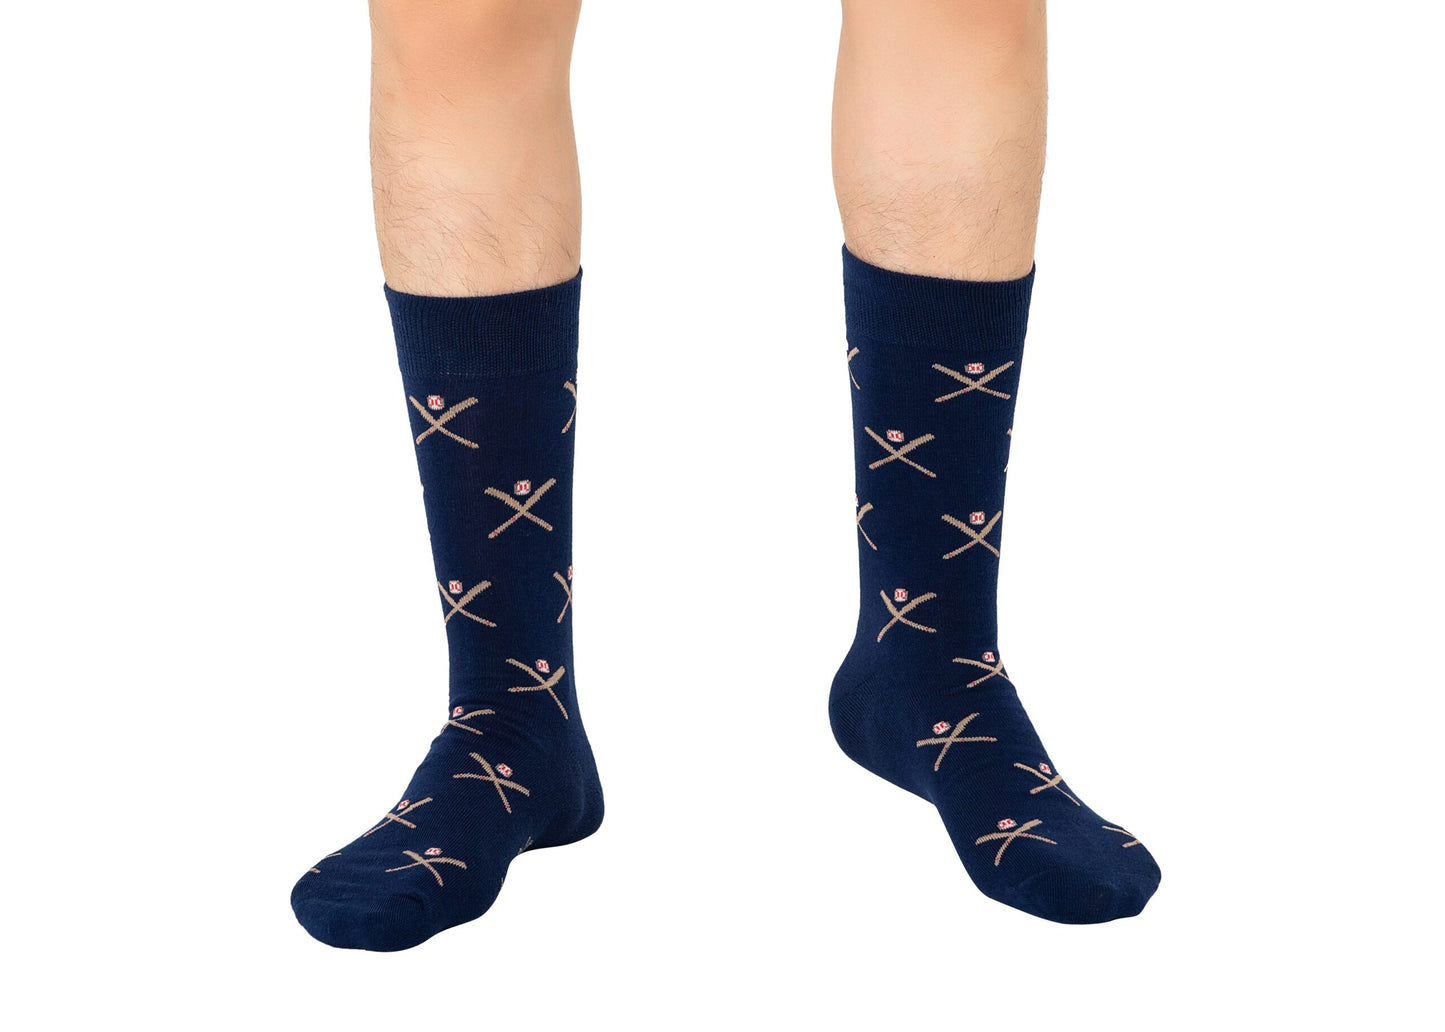 A pair of crossed baseball socks.